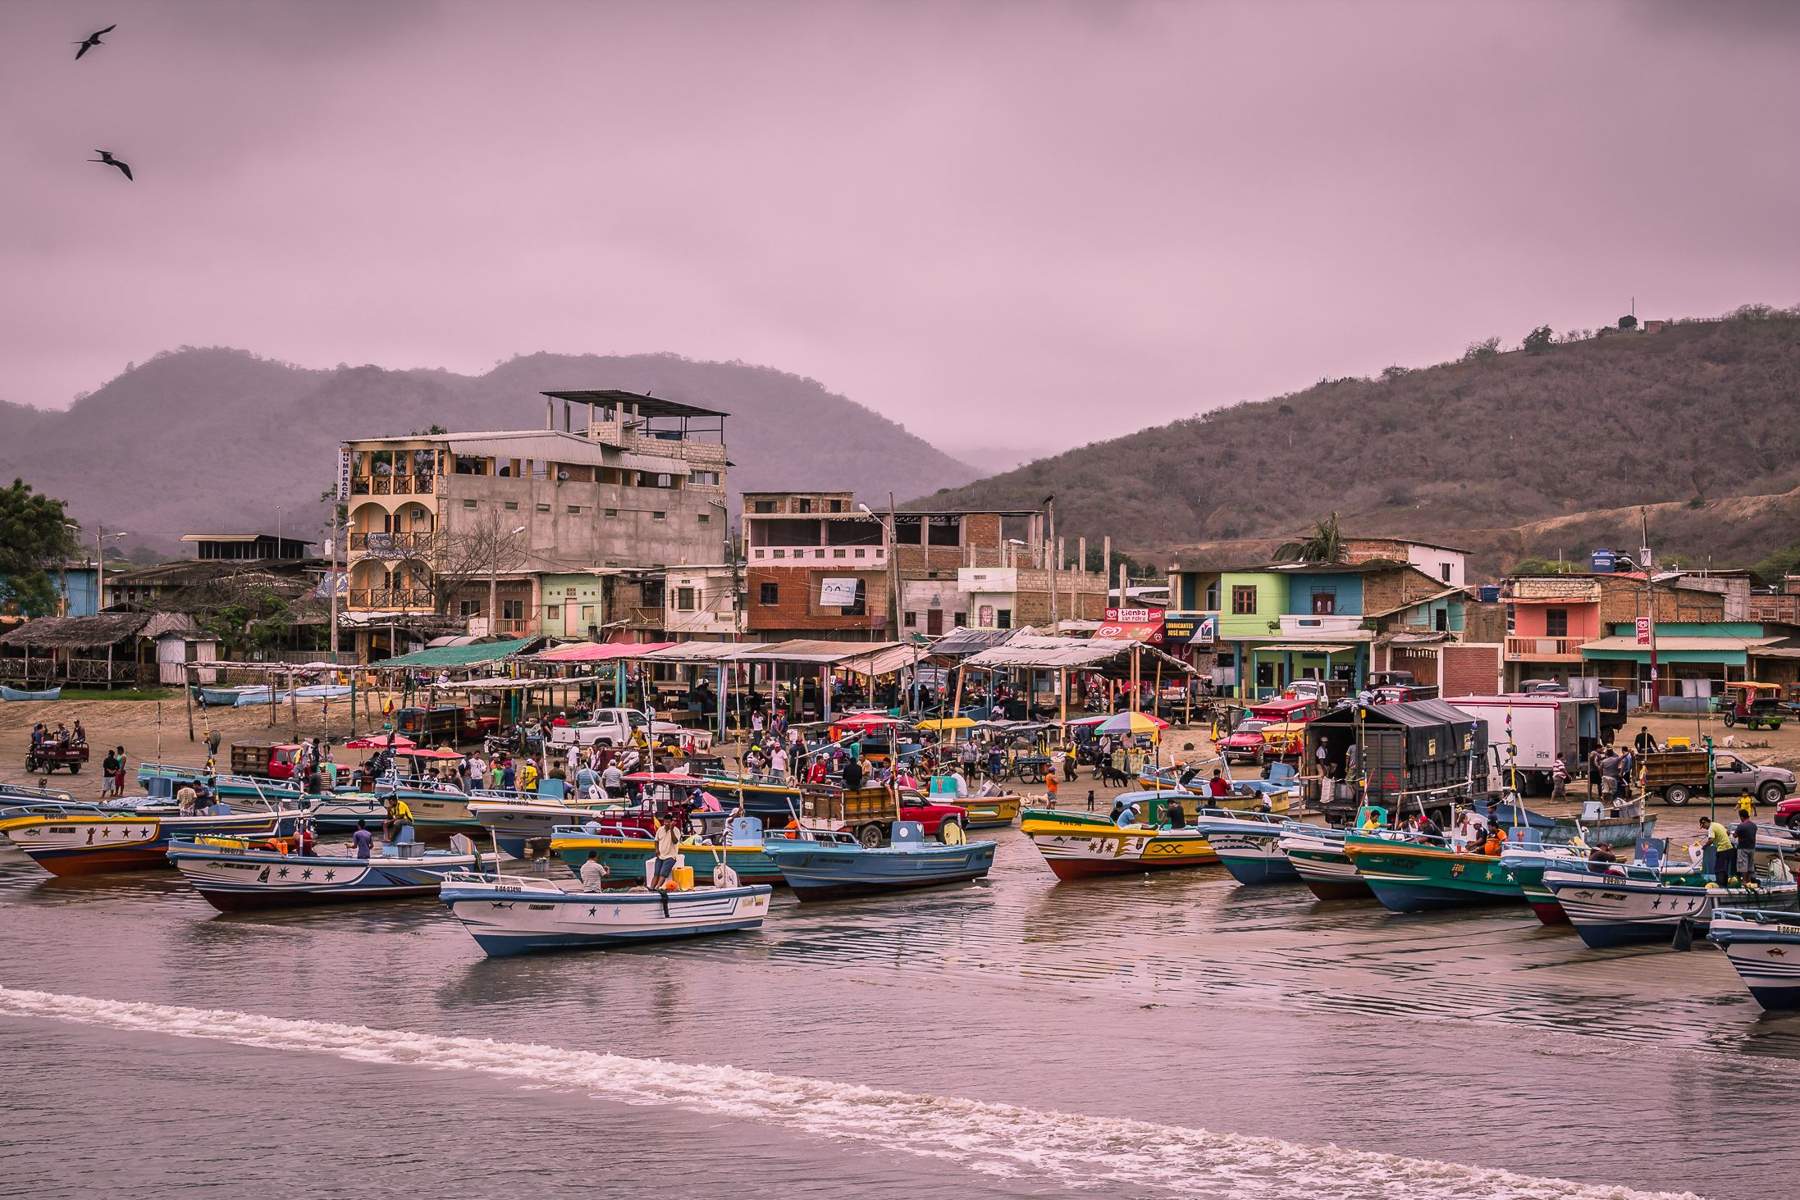 Puerto López, Ecuador. City travel guide – Attractions, Activities, Local cuisine